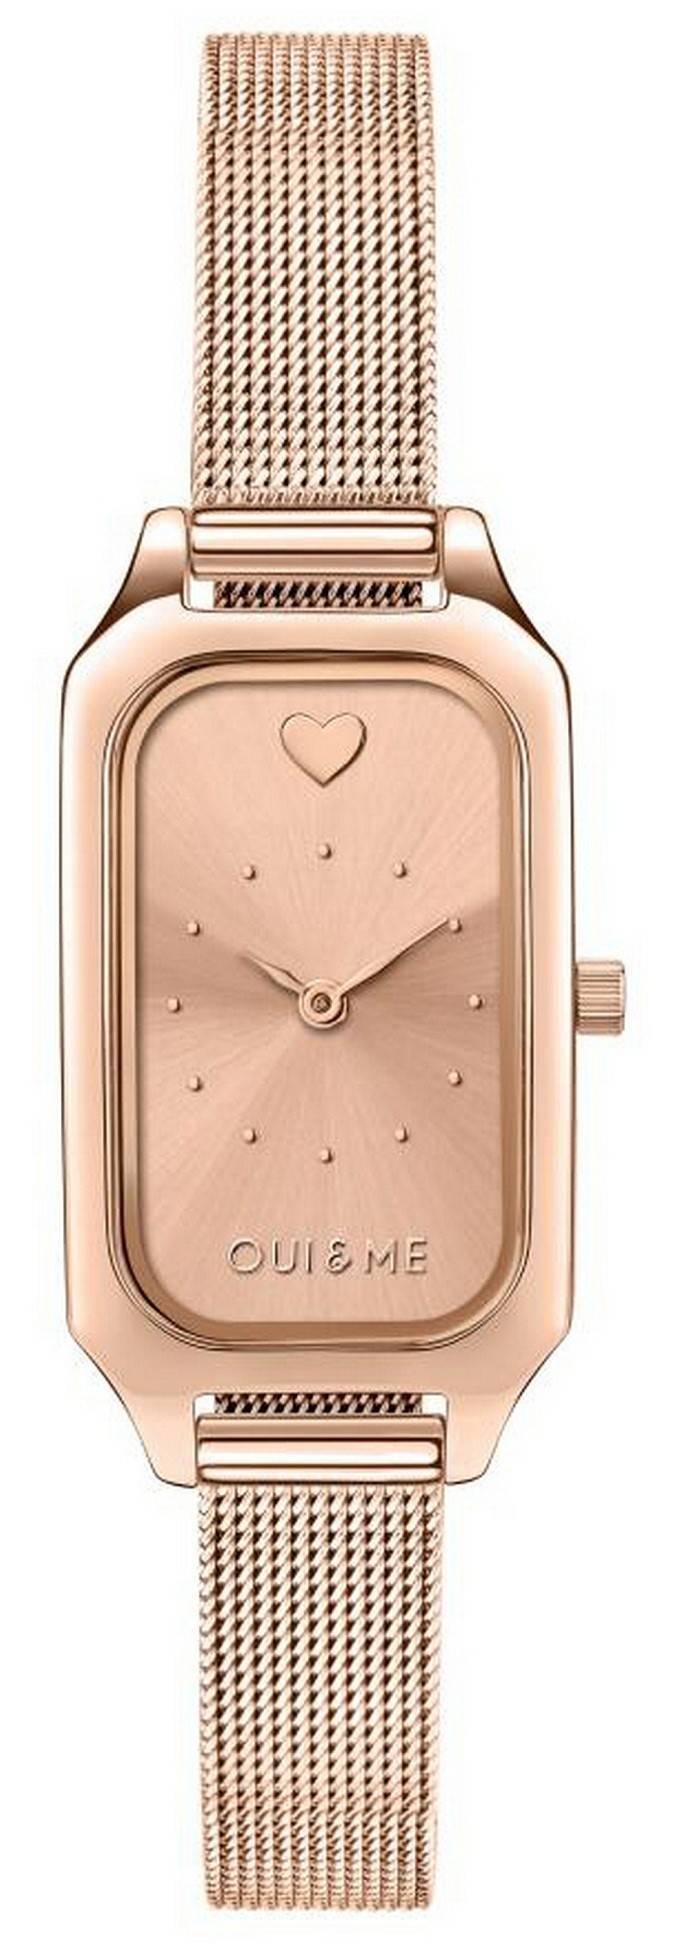 Oui & Me Finette Rose Gold Tone Stainless Steel Quartz ME010114 Women's Watch